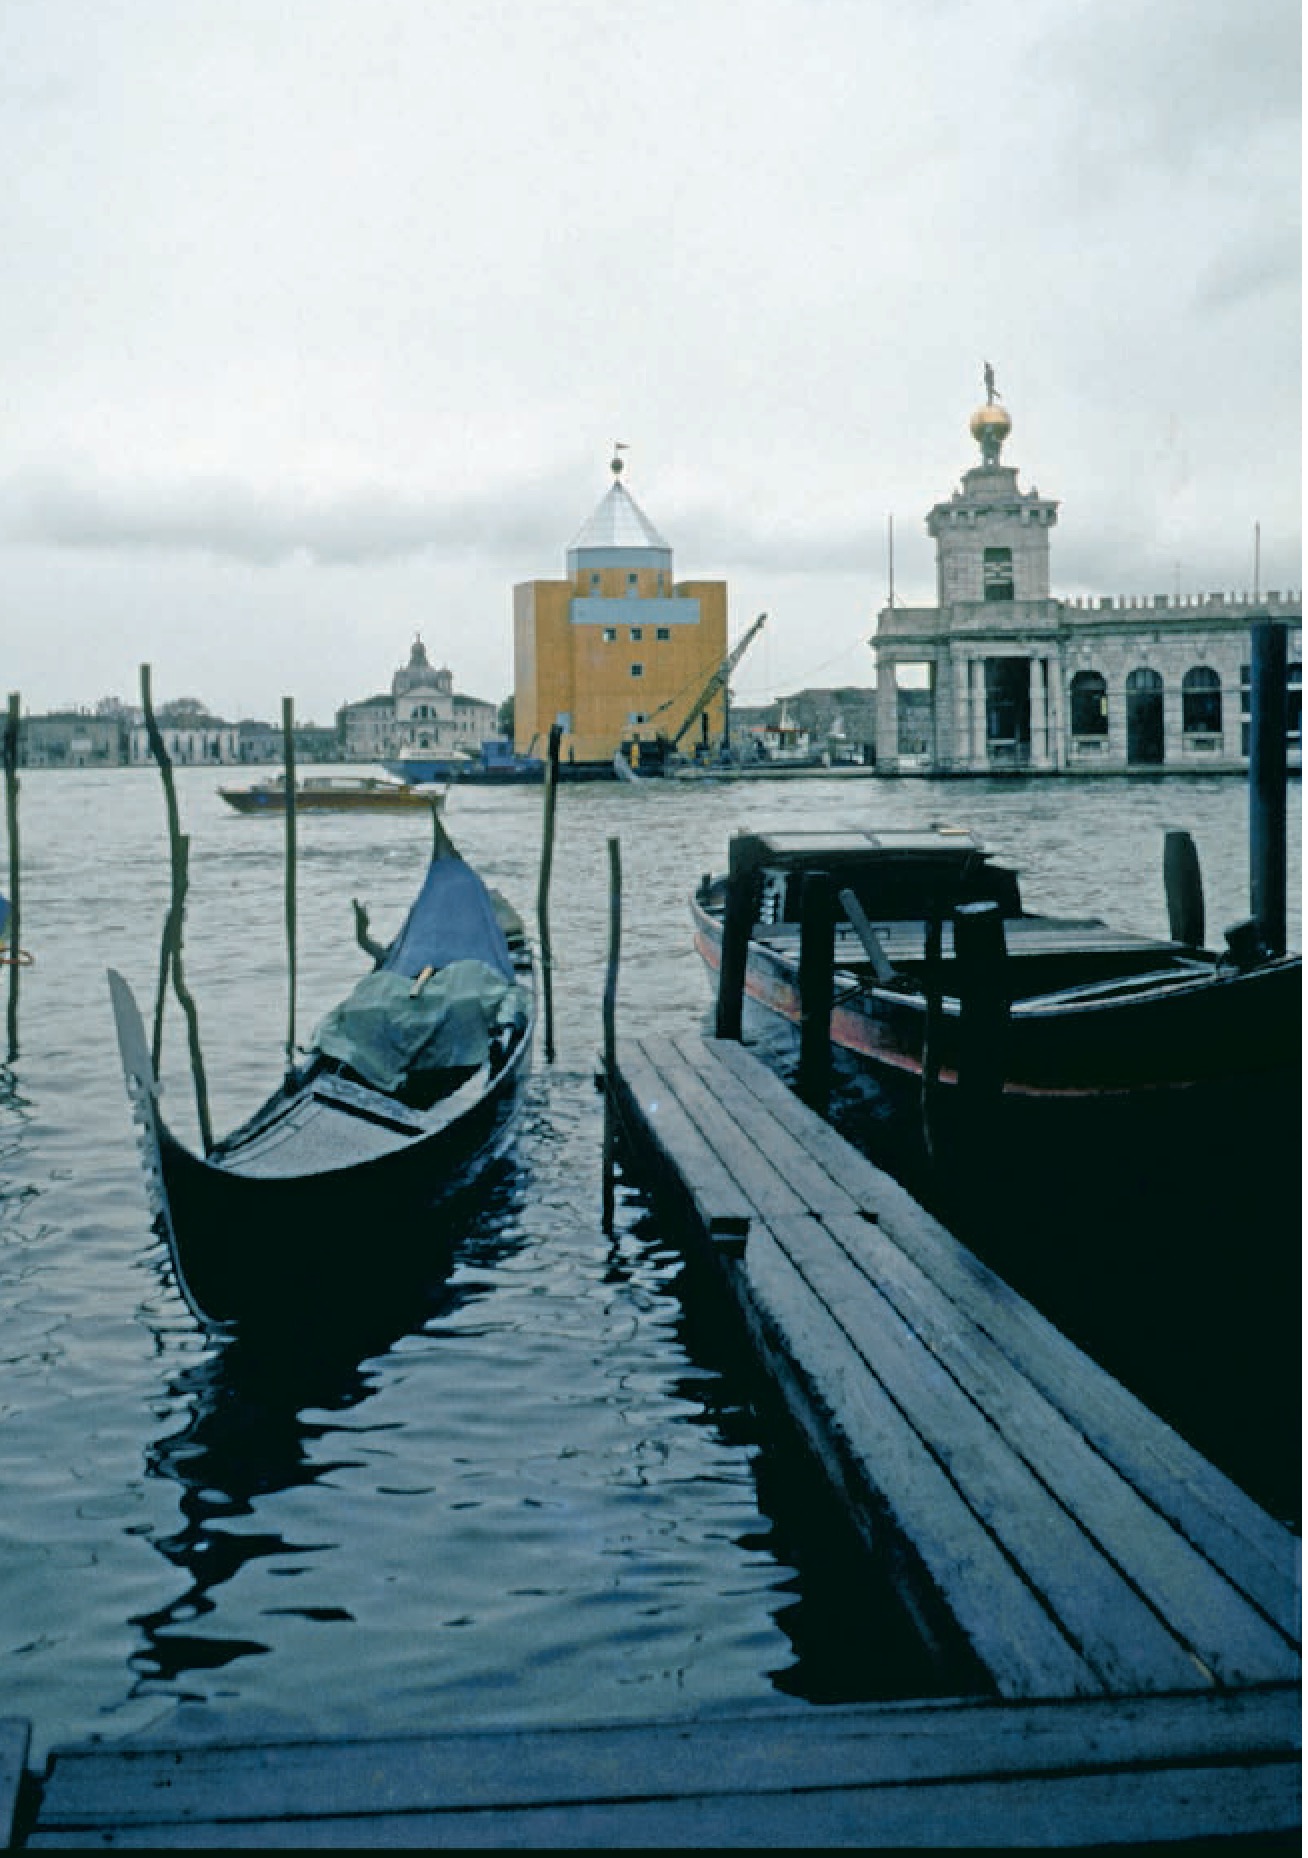 When the Venice Biennale went PoMo